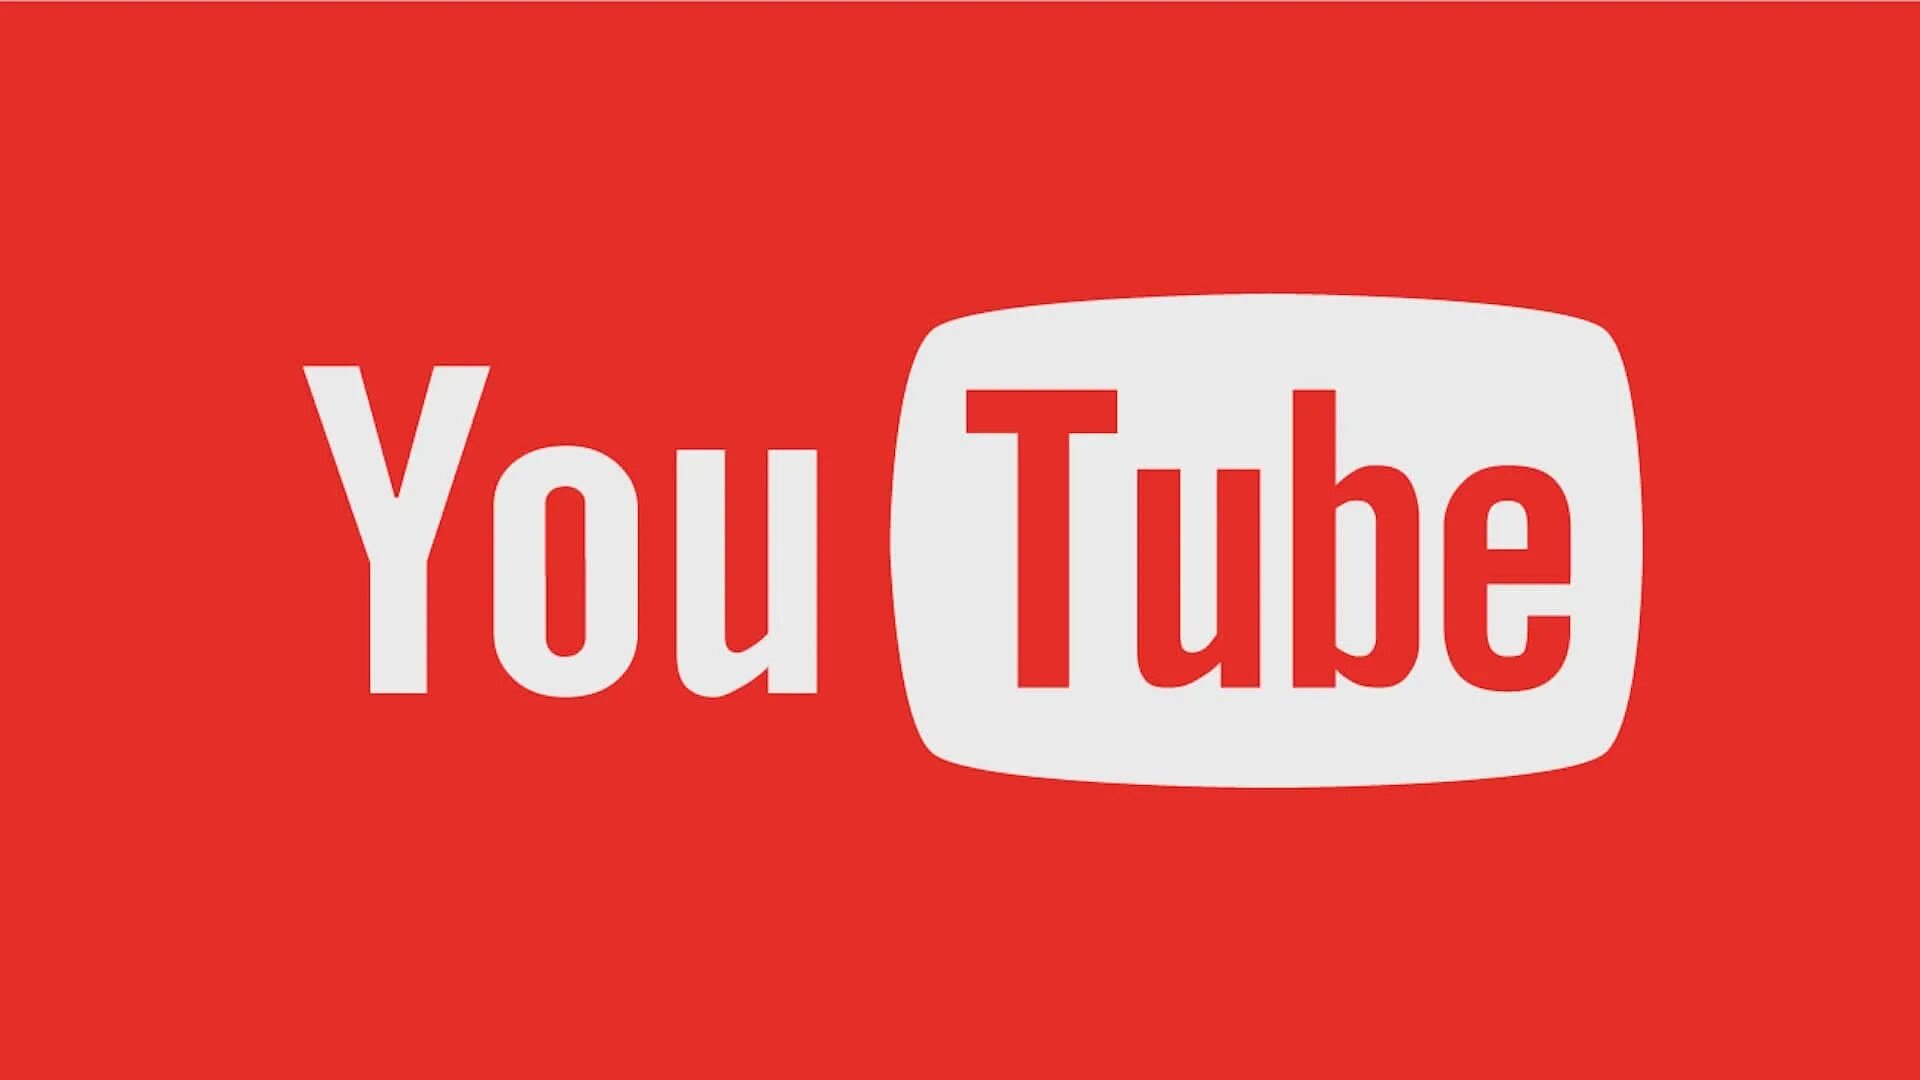 YOUTUBER. Логотип youtube. Изображение youtube. Логотип ютуба картинки. Ют т б